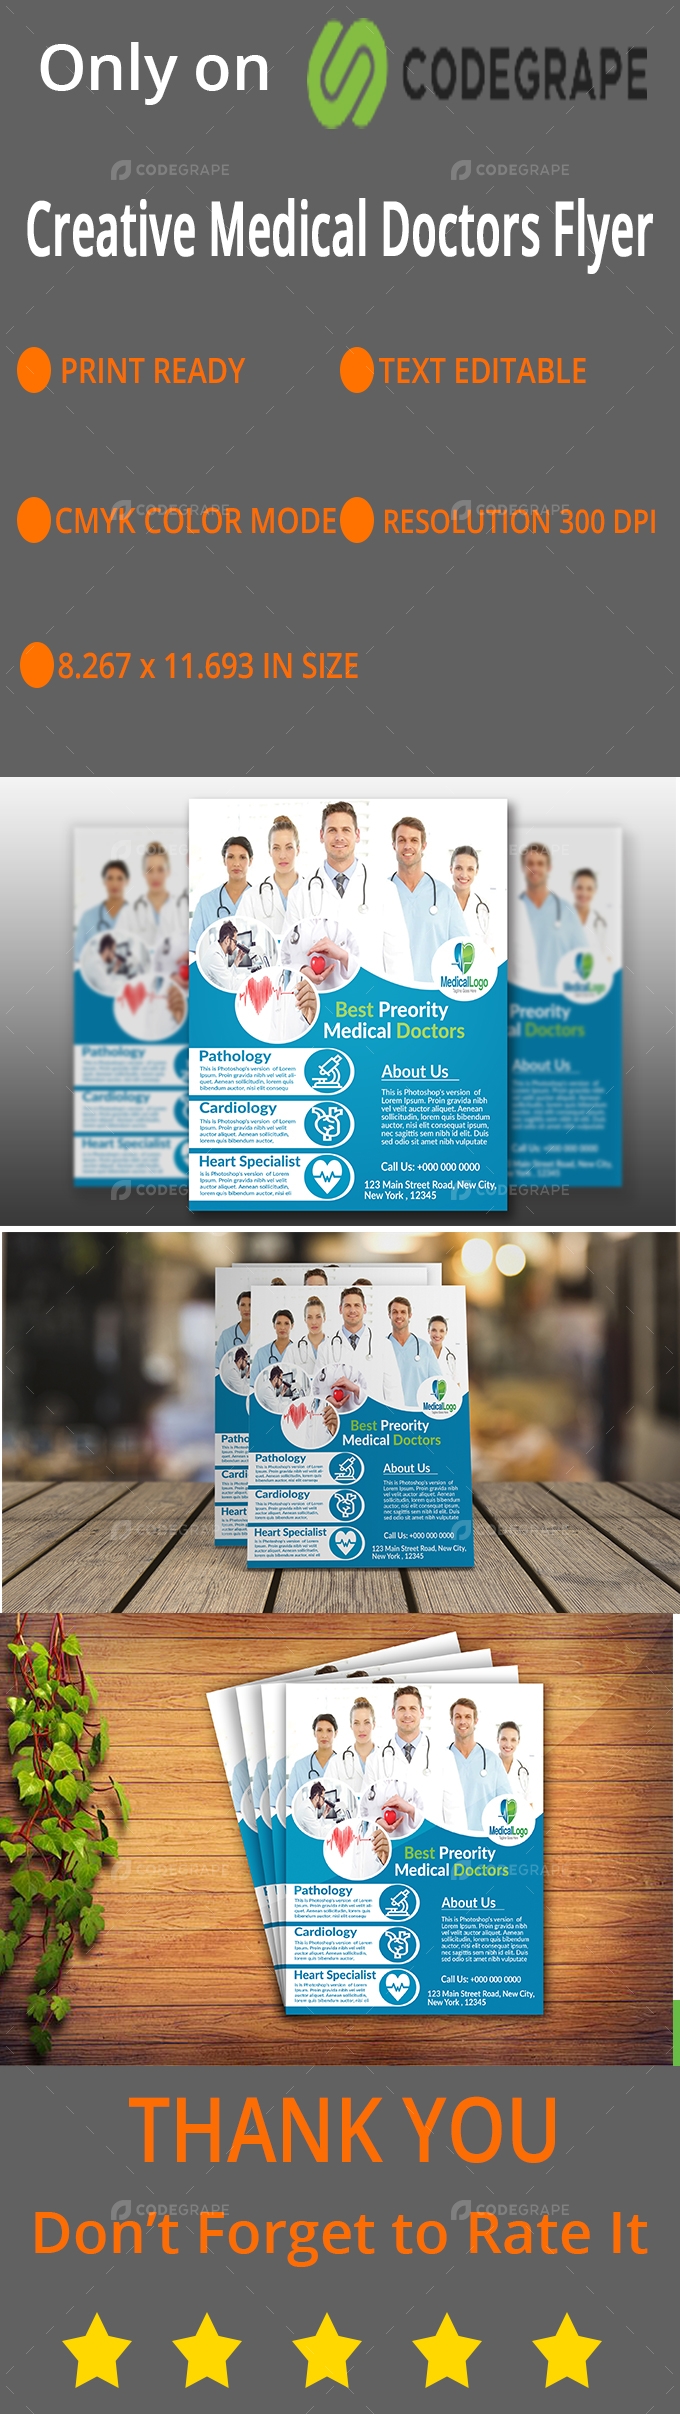 Creative Medical Doctors Flyer Design